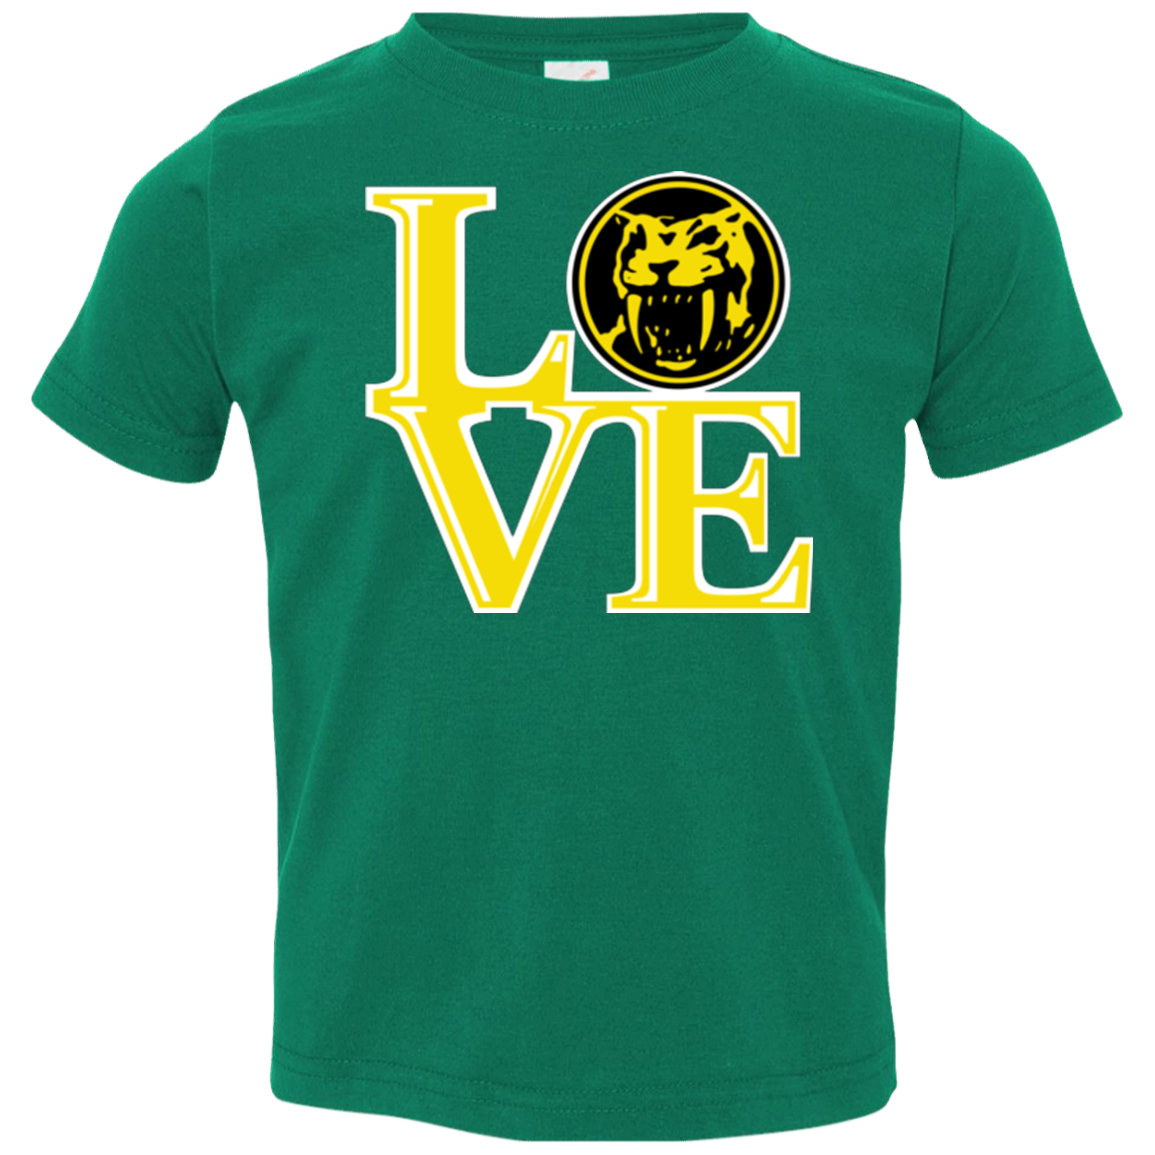 Yellow Ranger LOVE Toddler Premium T-Shirt